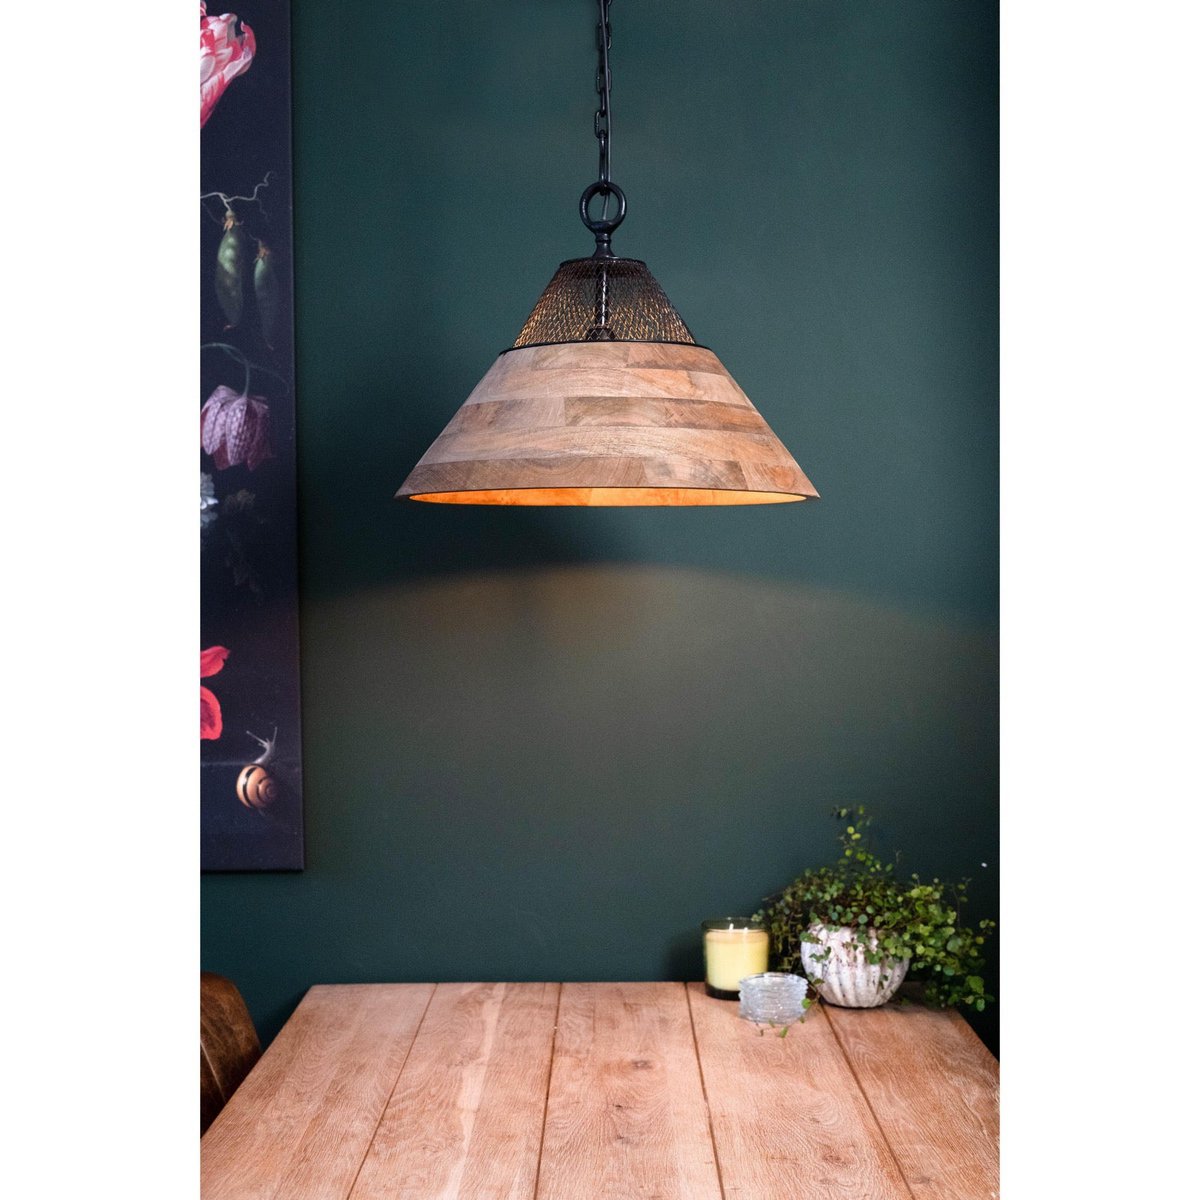 Hanging lamp TONY natural wood + matt black Ø50x30cm